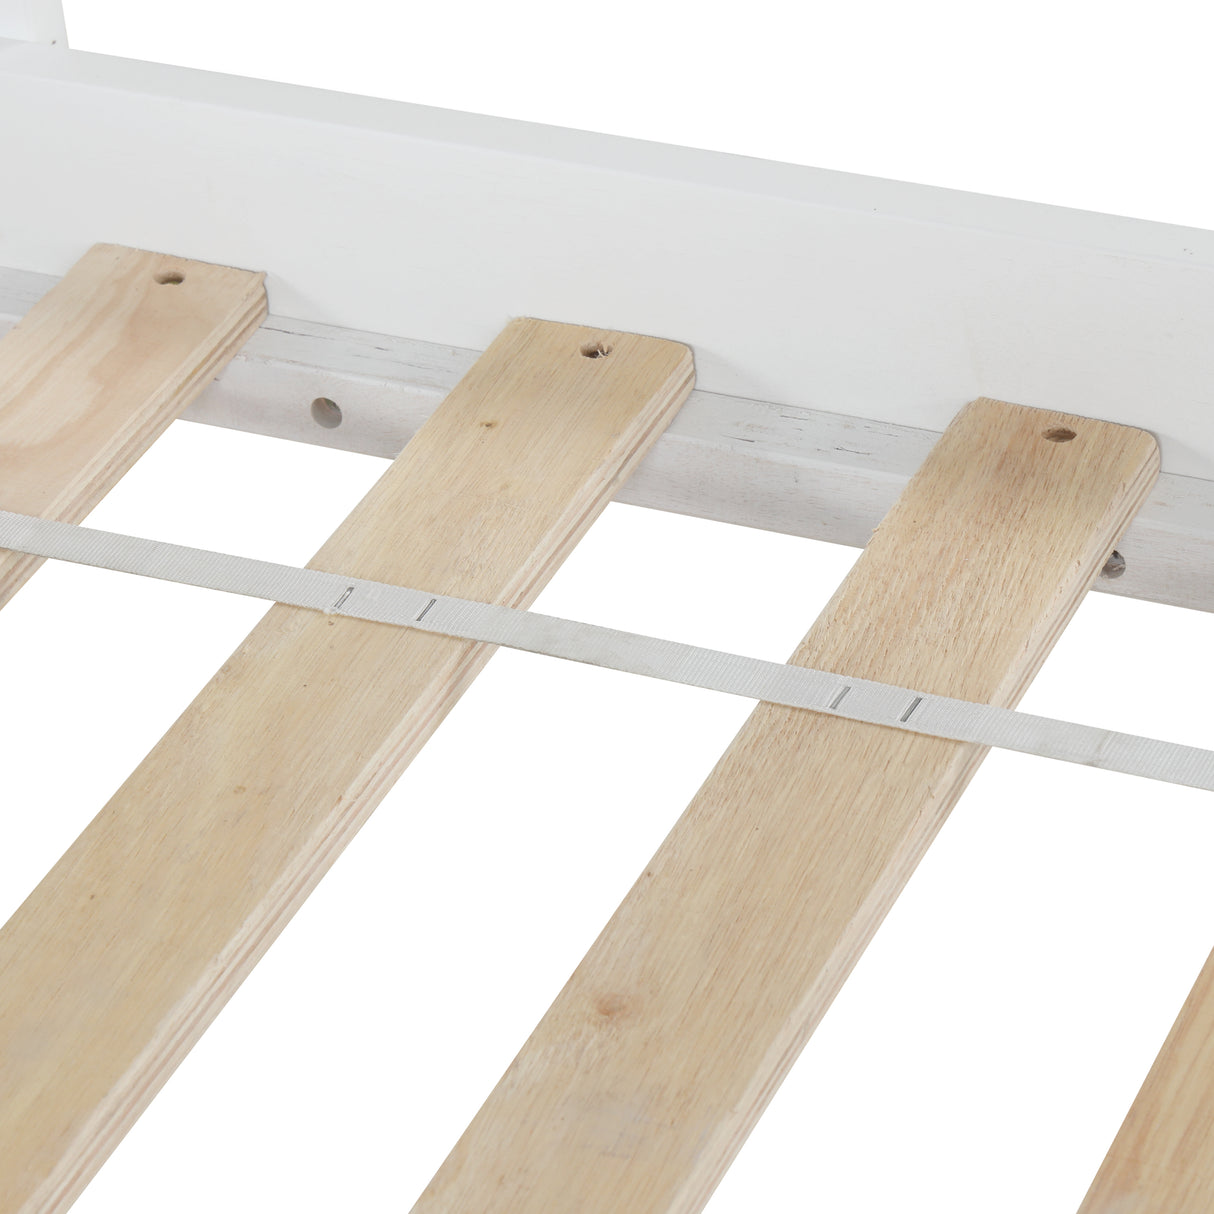 Twin Loft Bed with desk,ladder,shelves , White - Home Elegance USA